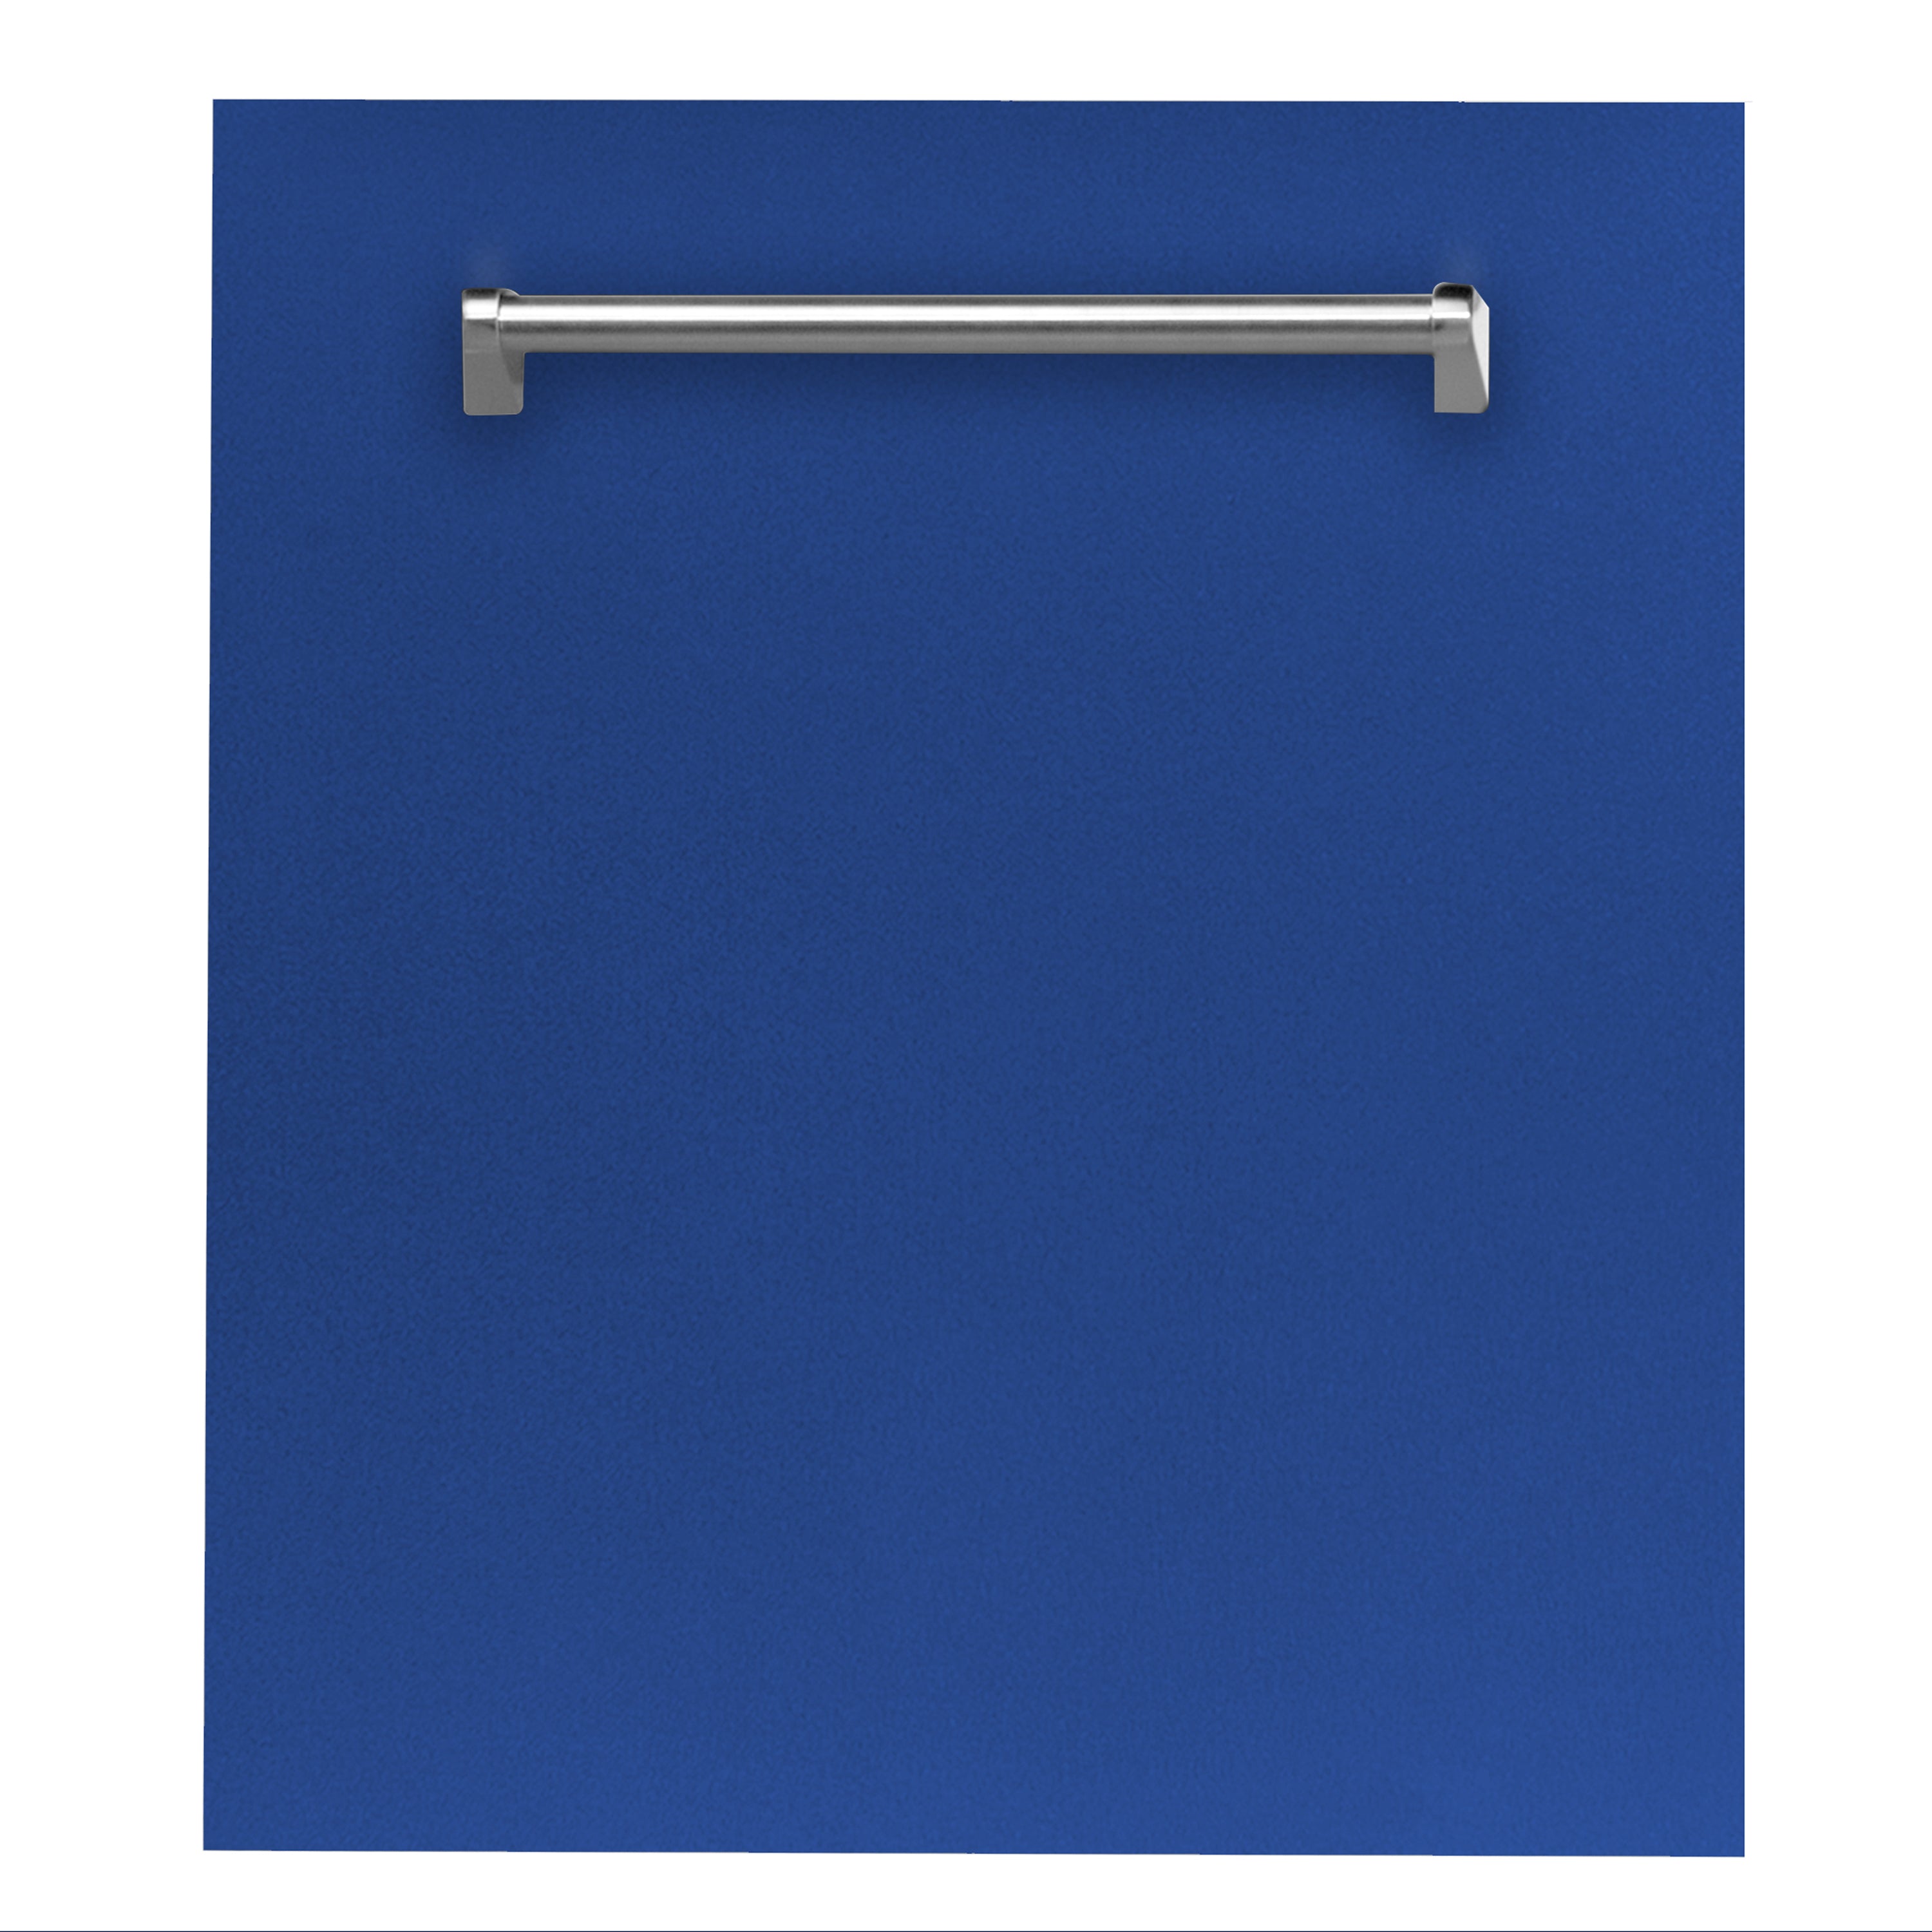 ZLINE 24" Dishwasher Panel in Blue Matte with Traditional Handle (DP-BM-24)